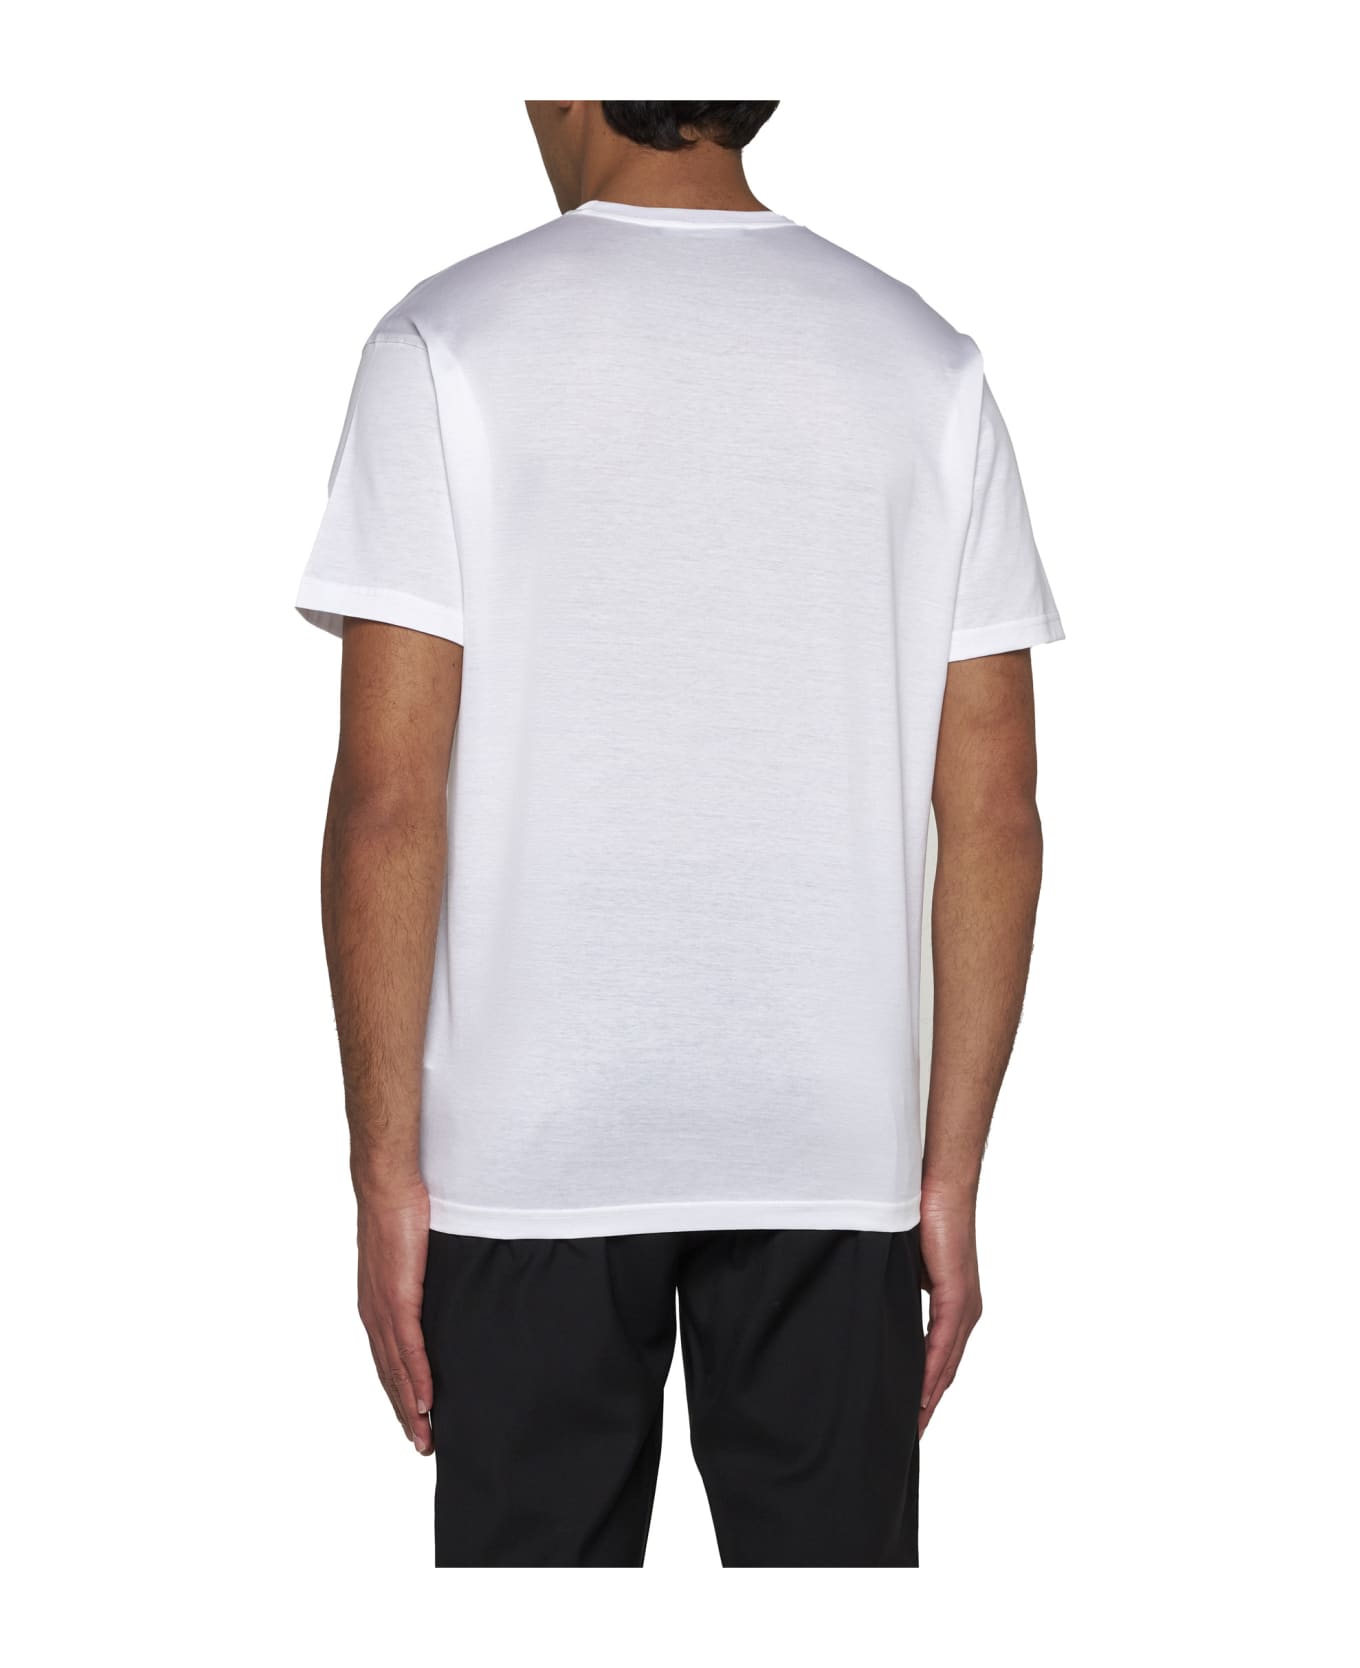 Low Brand T-Shirt - White